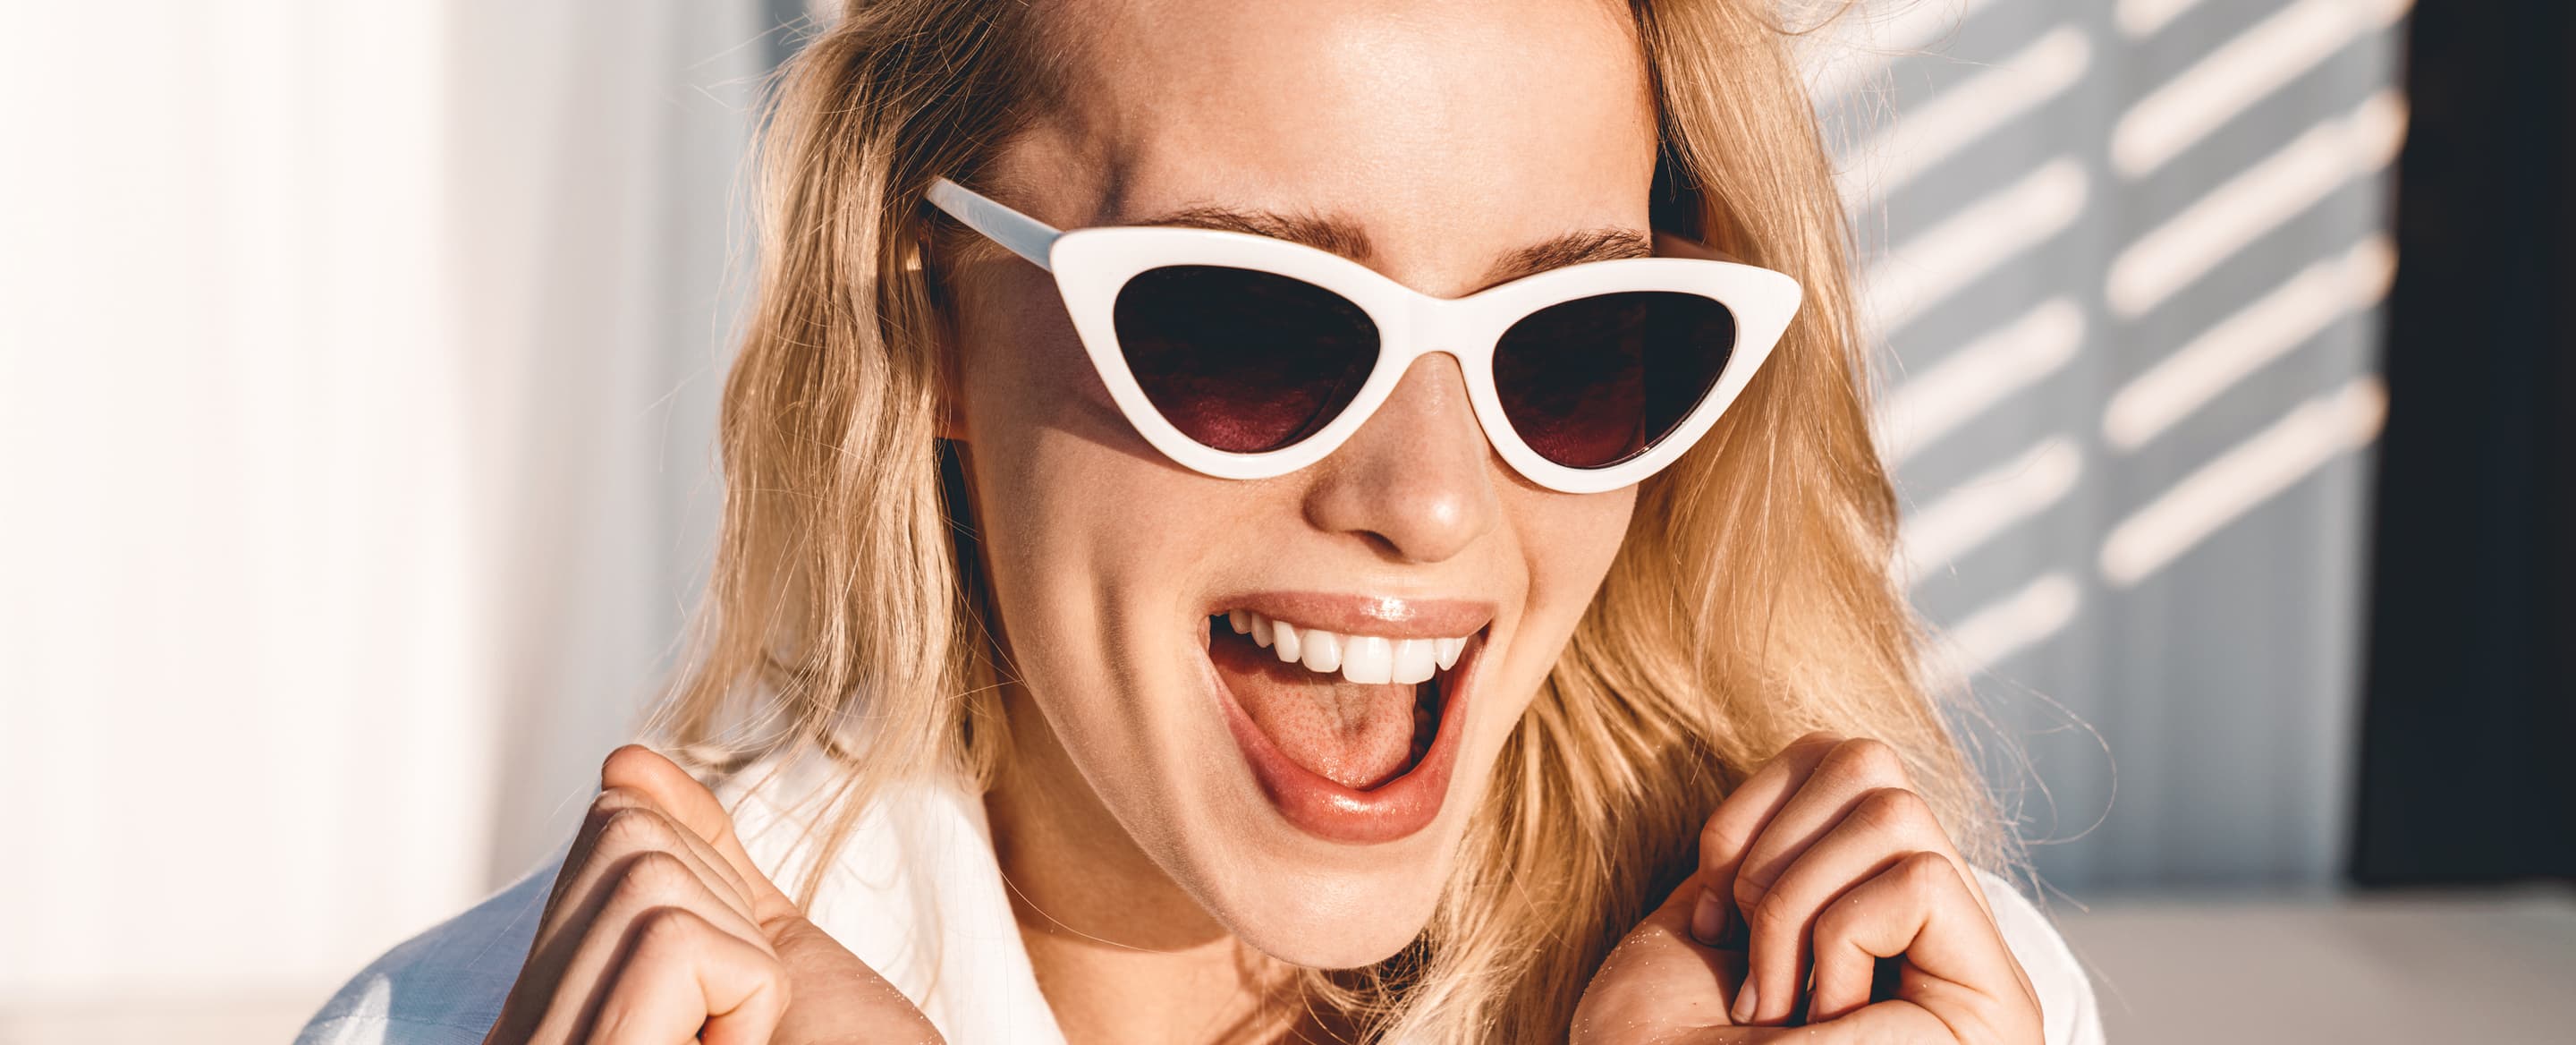 Image of seductive excited woman in sunglasses scr 2 GDUEVU